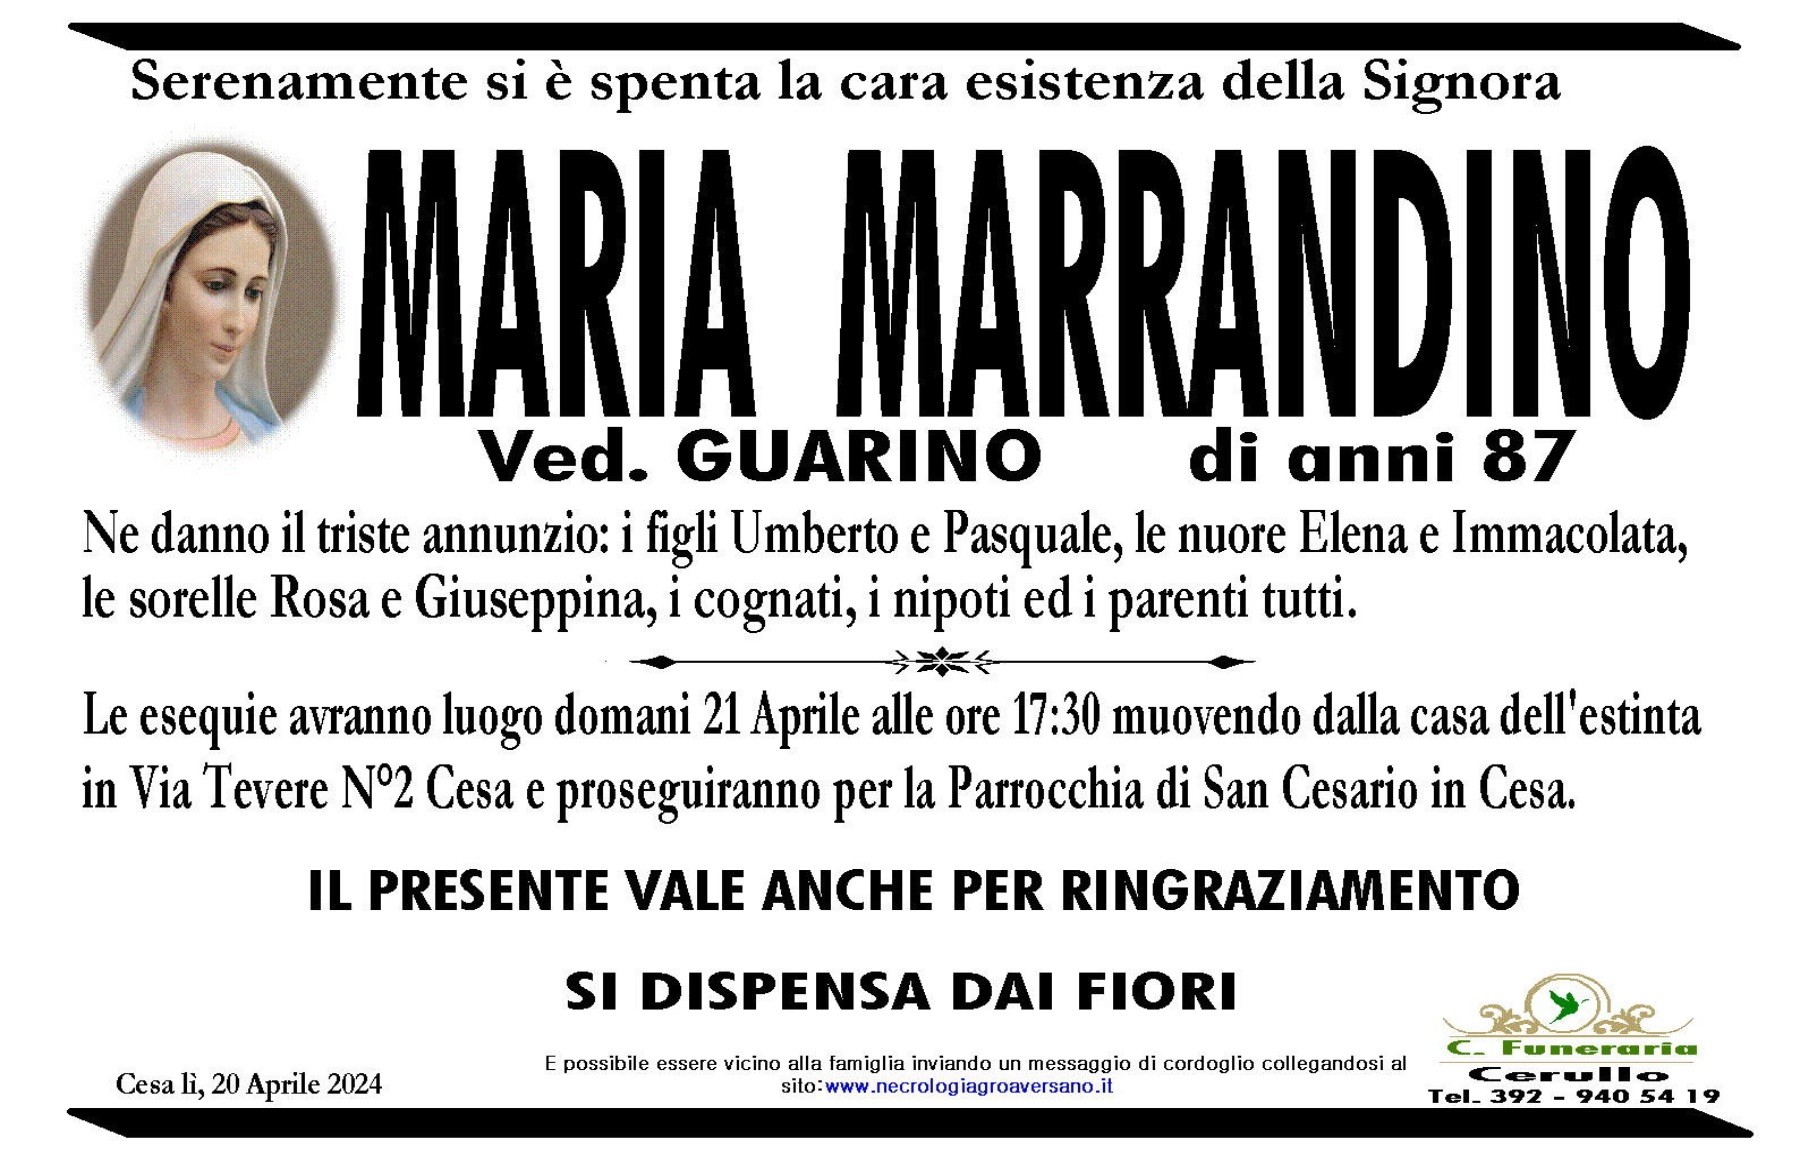 Maria Marrandino